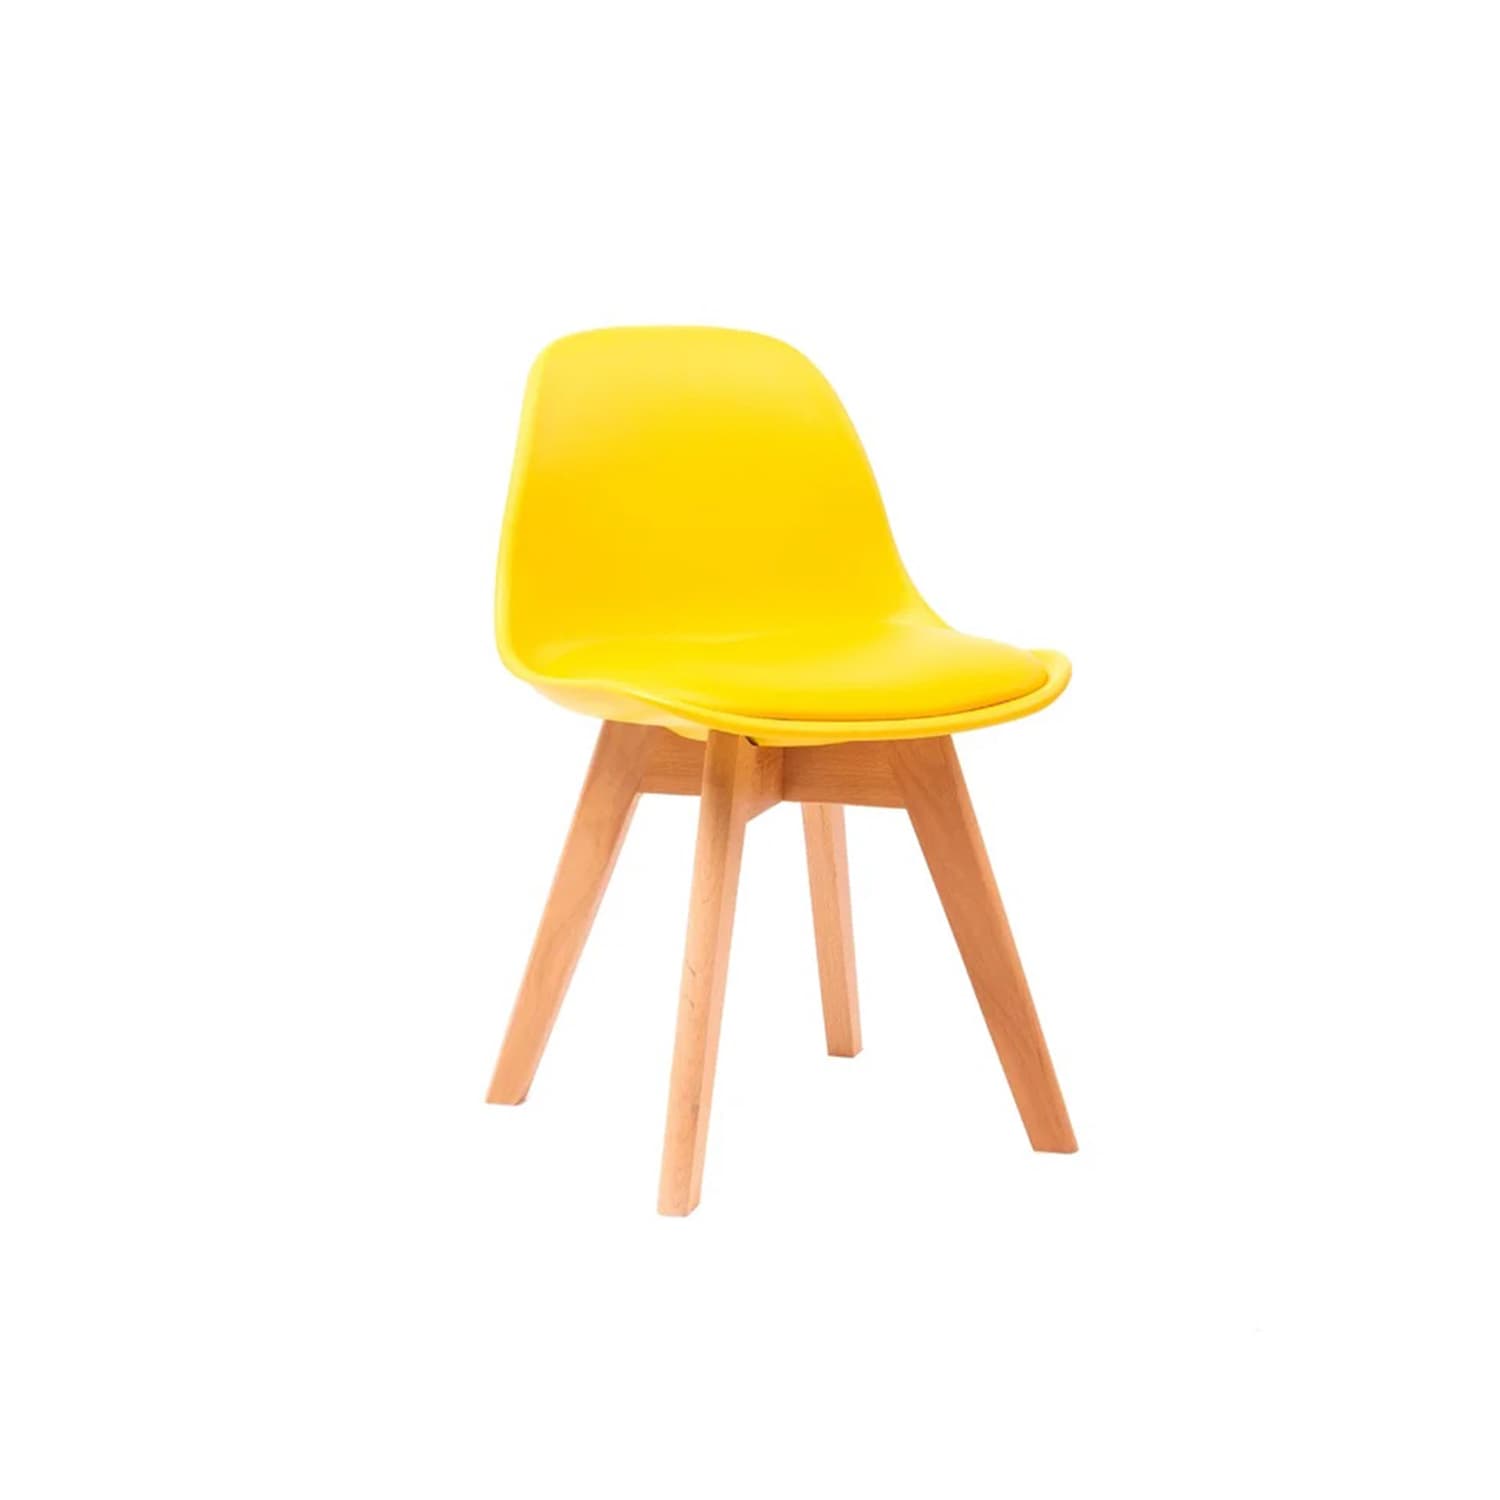 The Best Kids' Desk Chairs: Ergonomic Chairs 2022